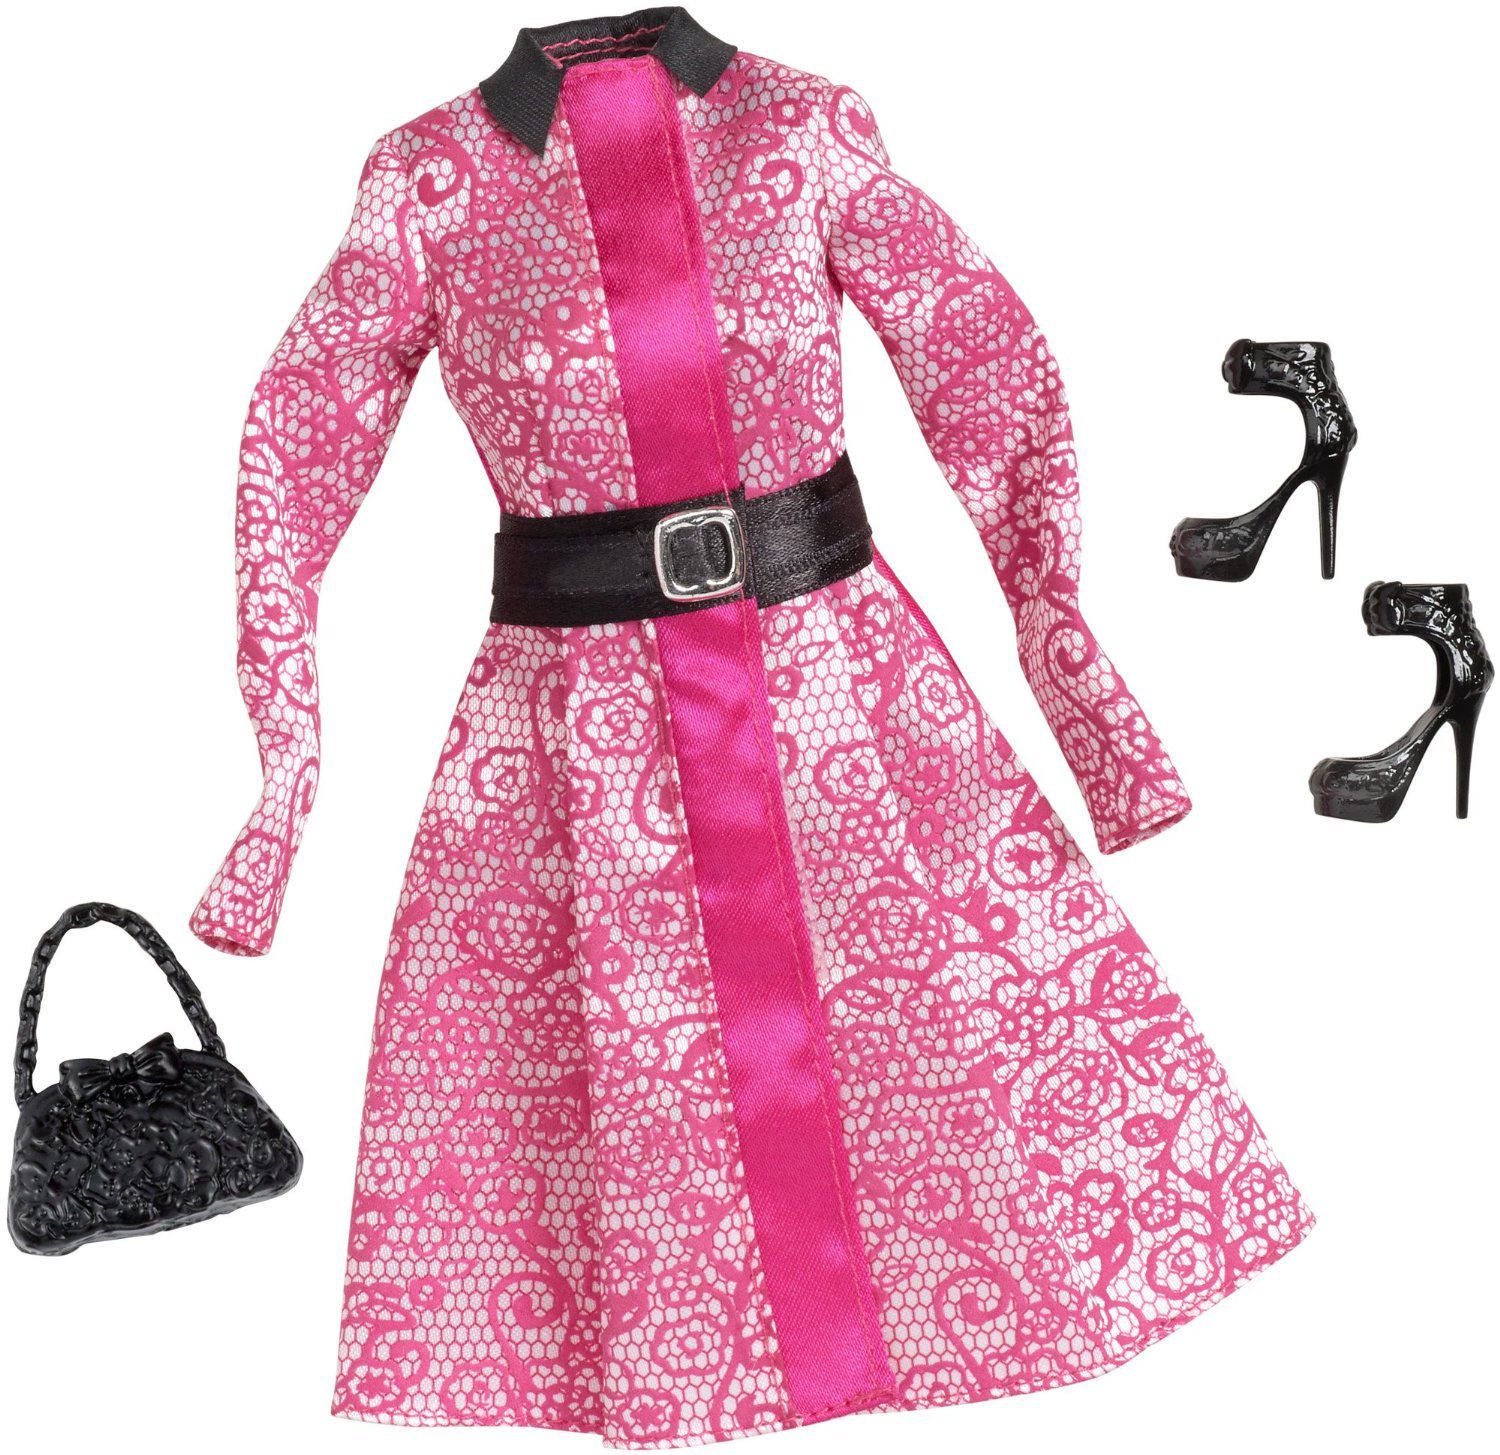 Mattel Barbie Complete Look Fashion Pack #4 - Pink Long Coat | Walmart